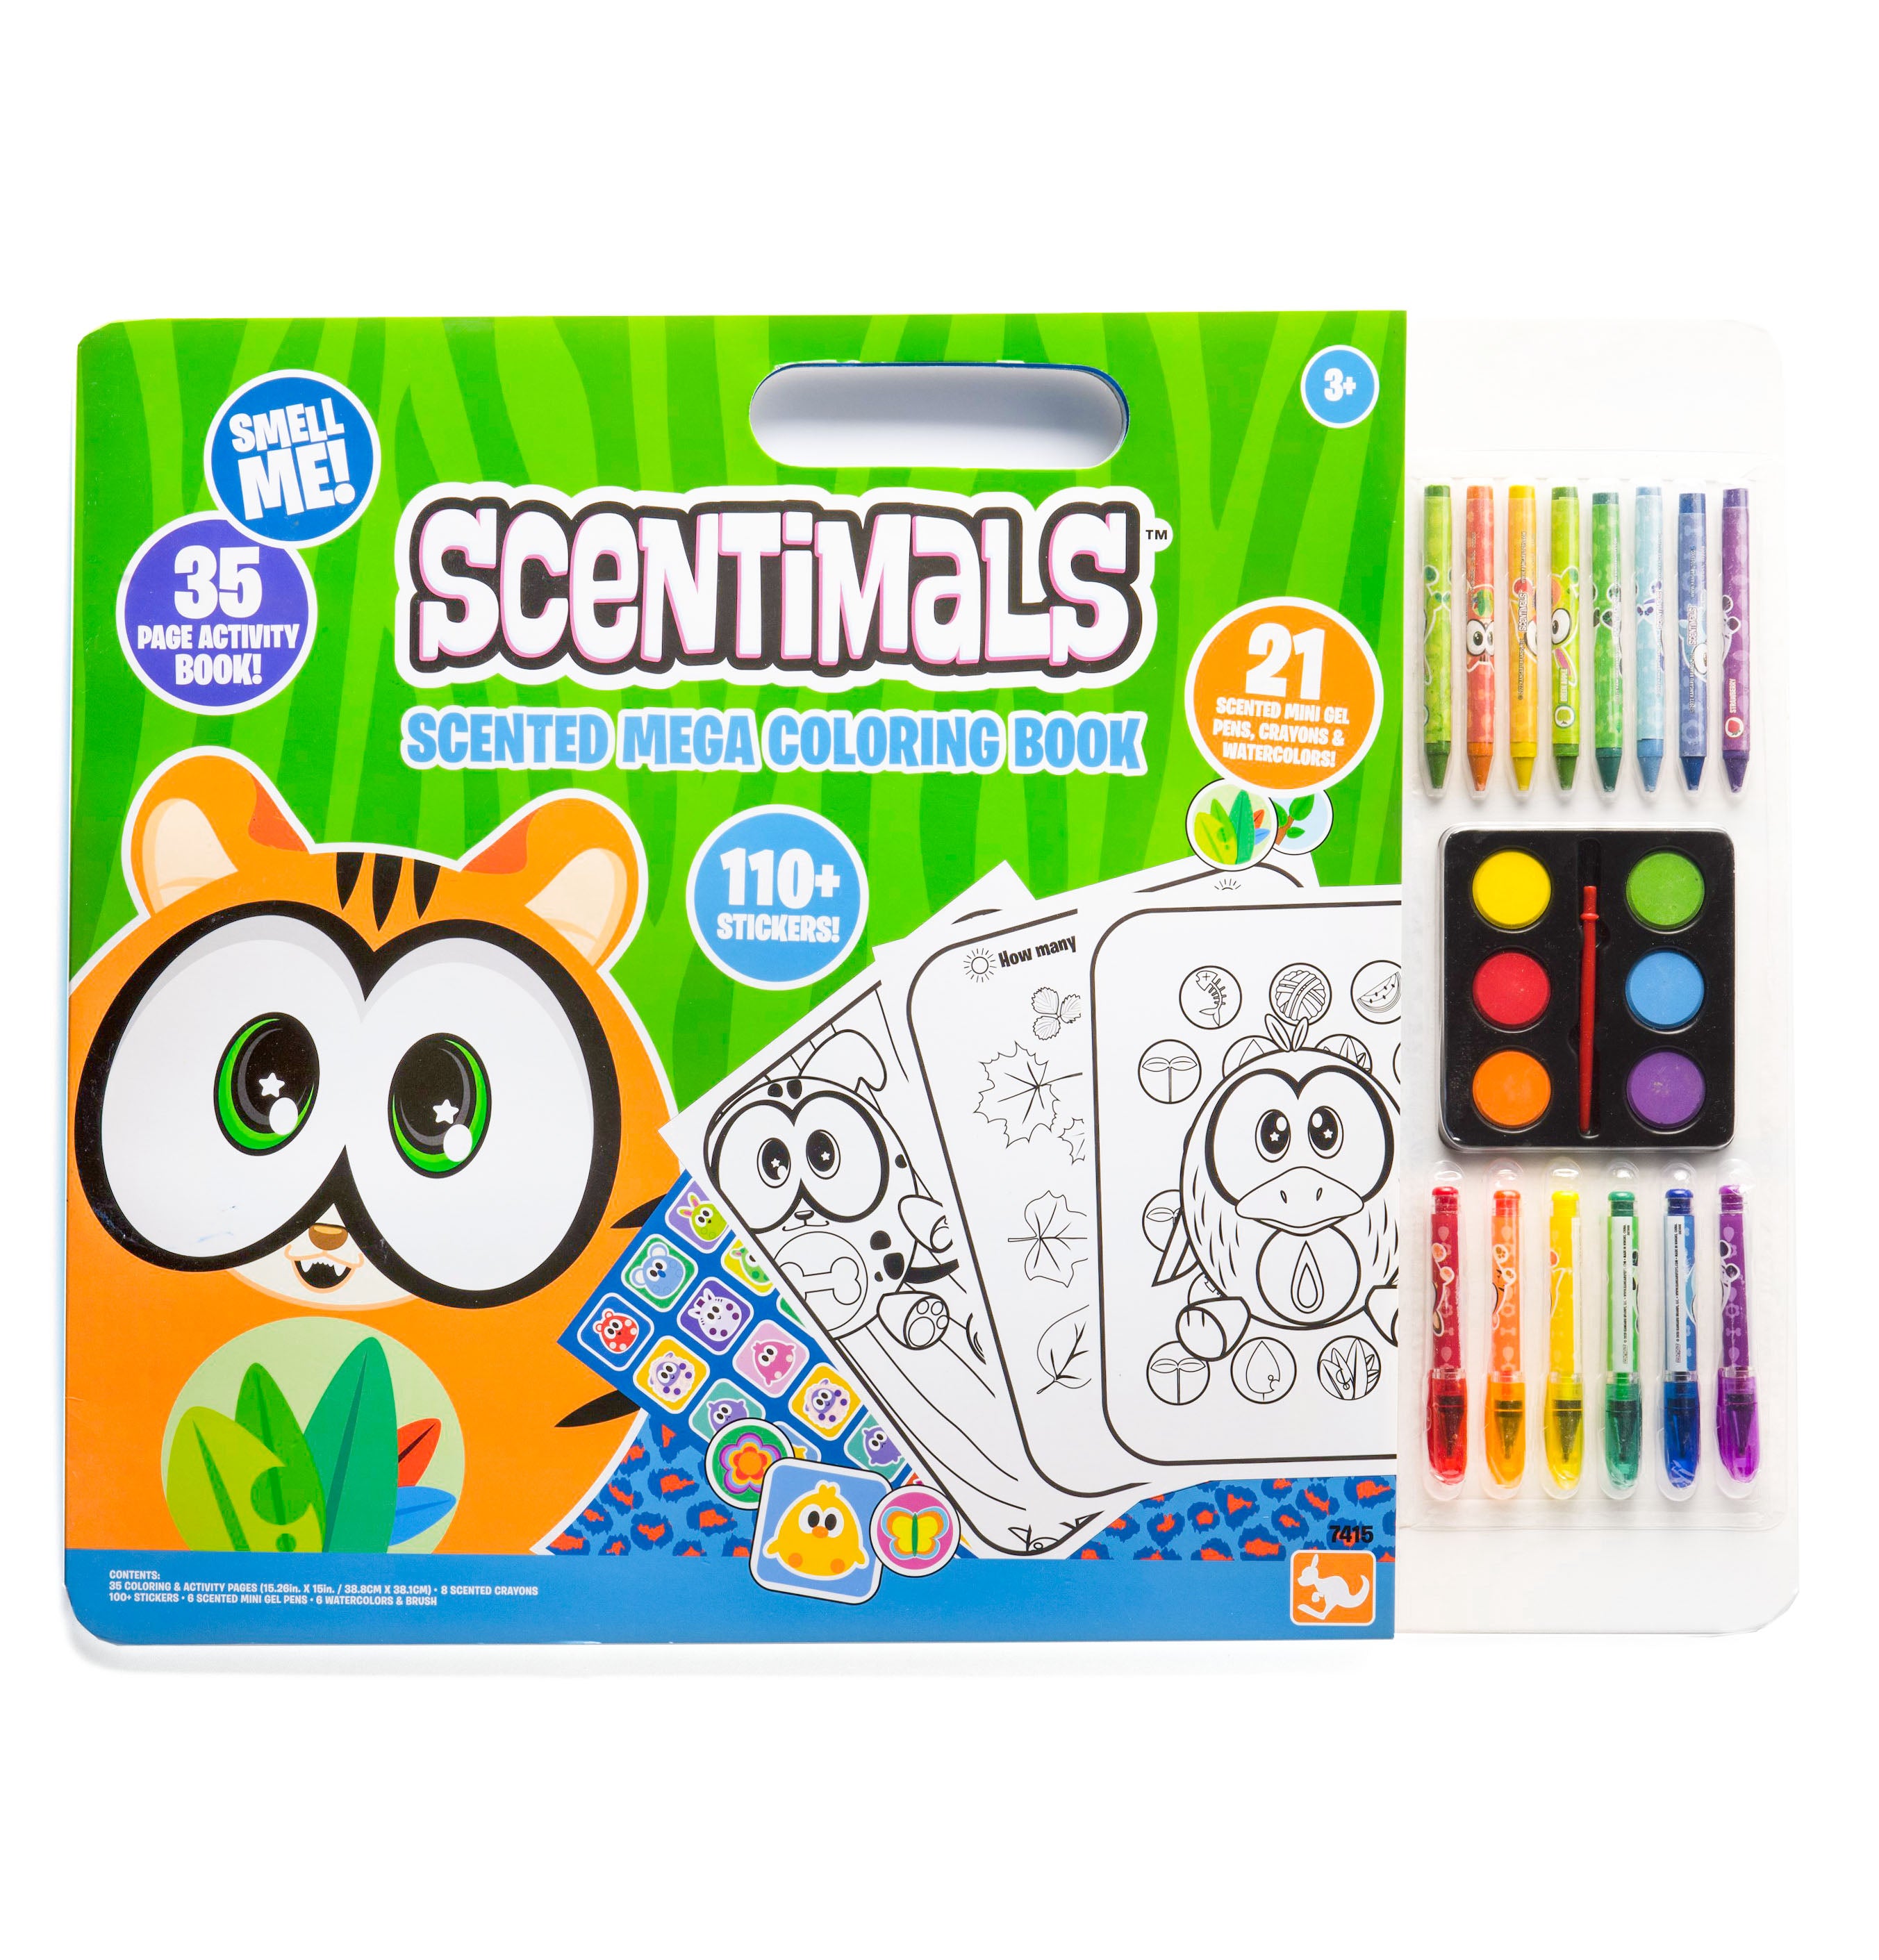 Scentimals Mega Coloring Book – Kangaru Toys and Stationery